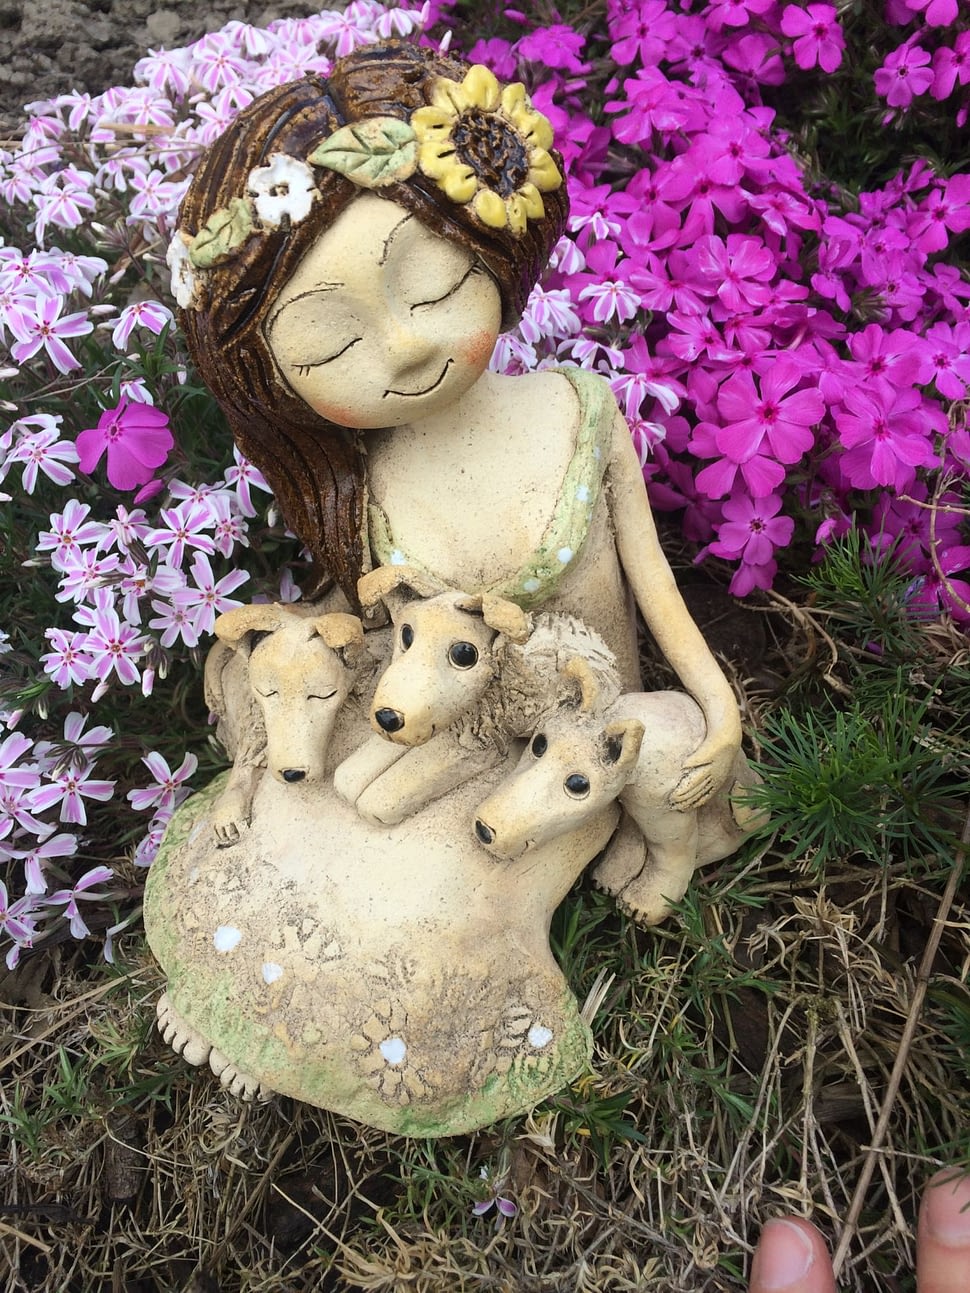 víla věneček keramika pes štěně andílci keramikaandee dekorace soška